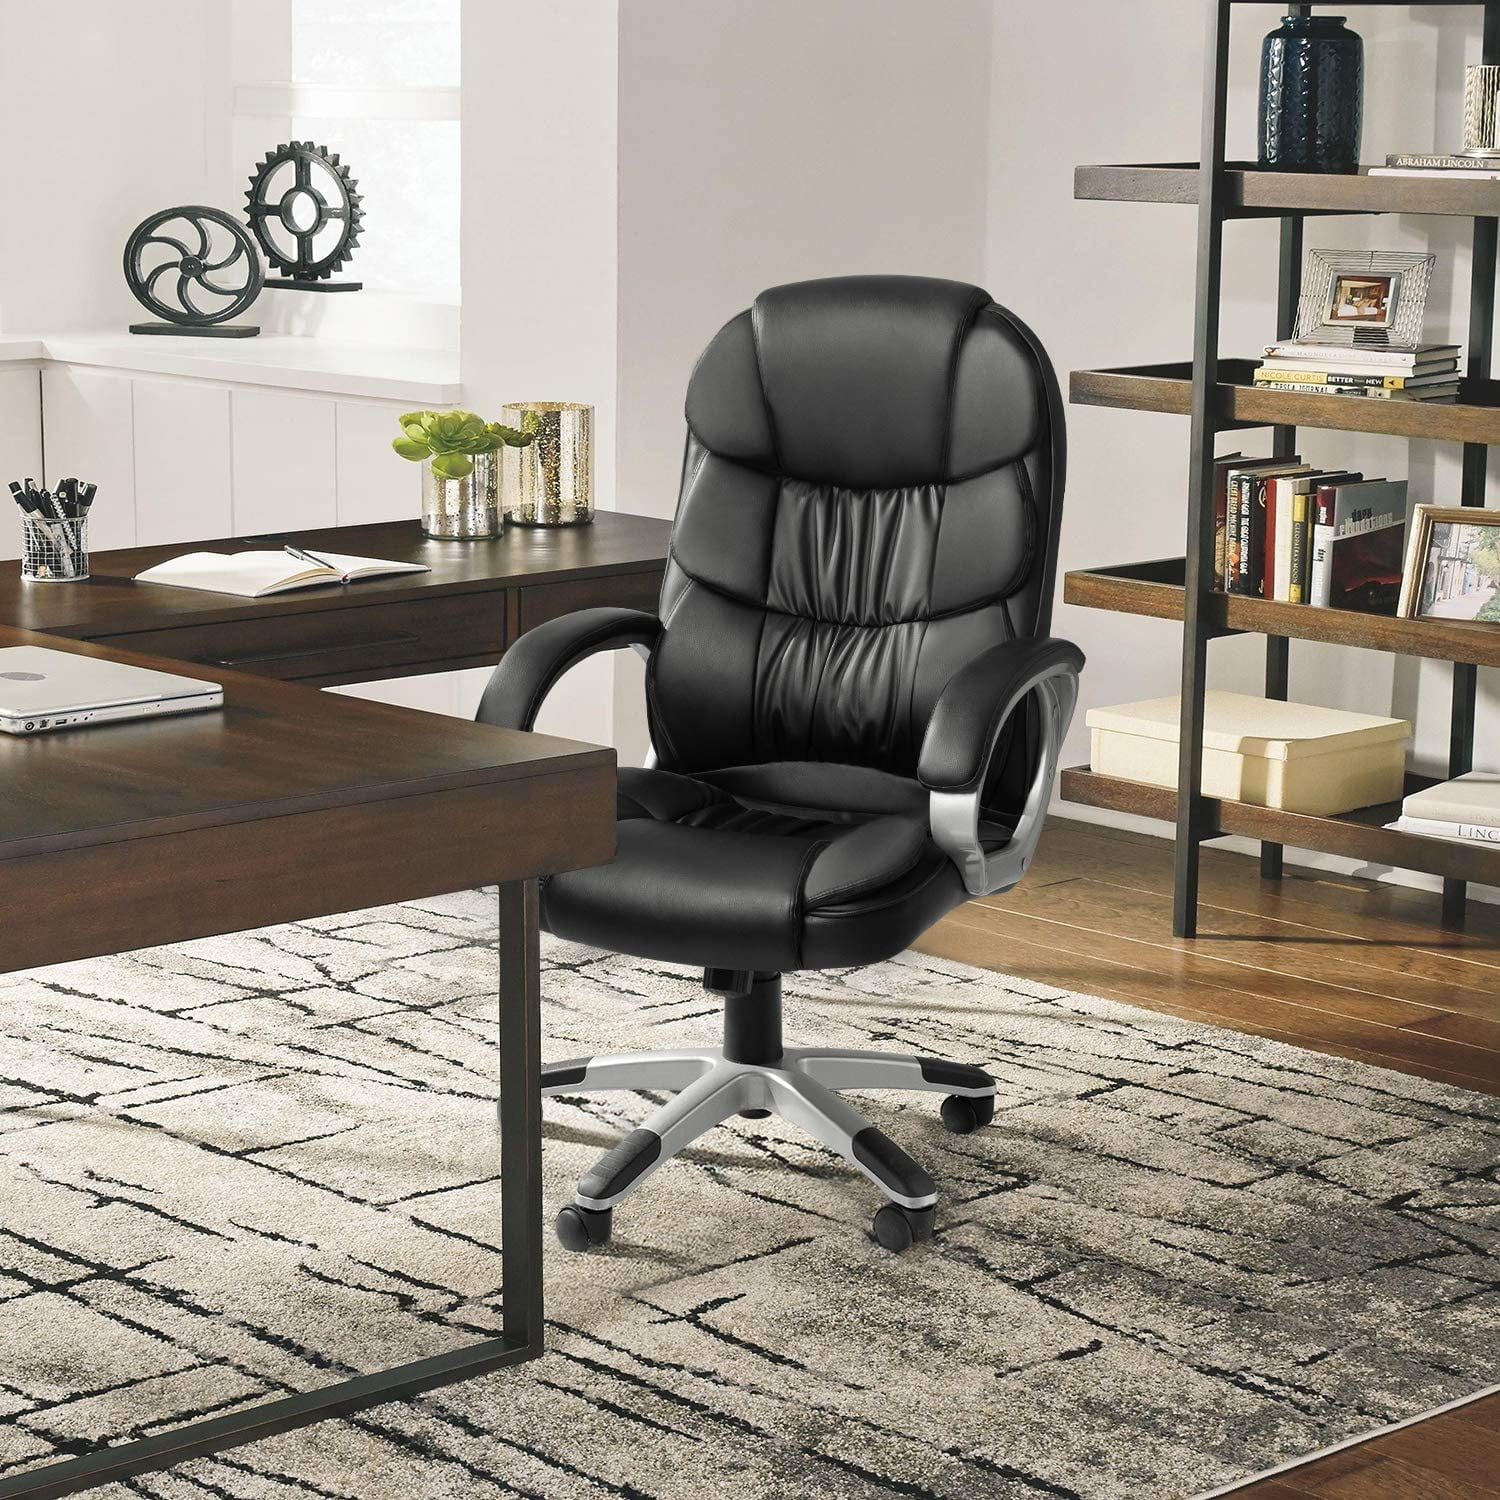 Homall Office Desk Chair High Back Executive Ergonomic Computer Chair - On  Sale - Bed Bath & Beyond - 33044721